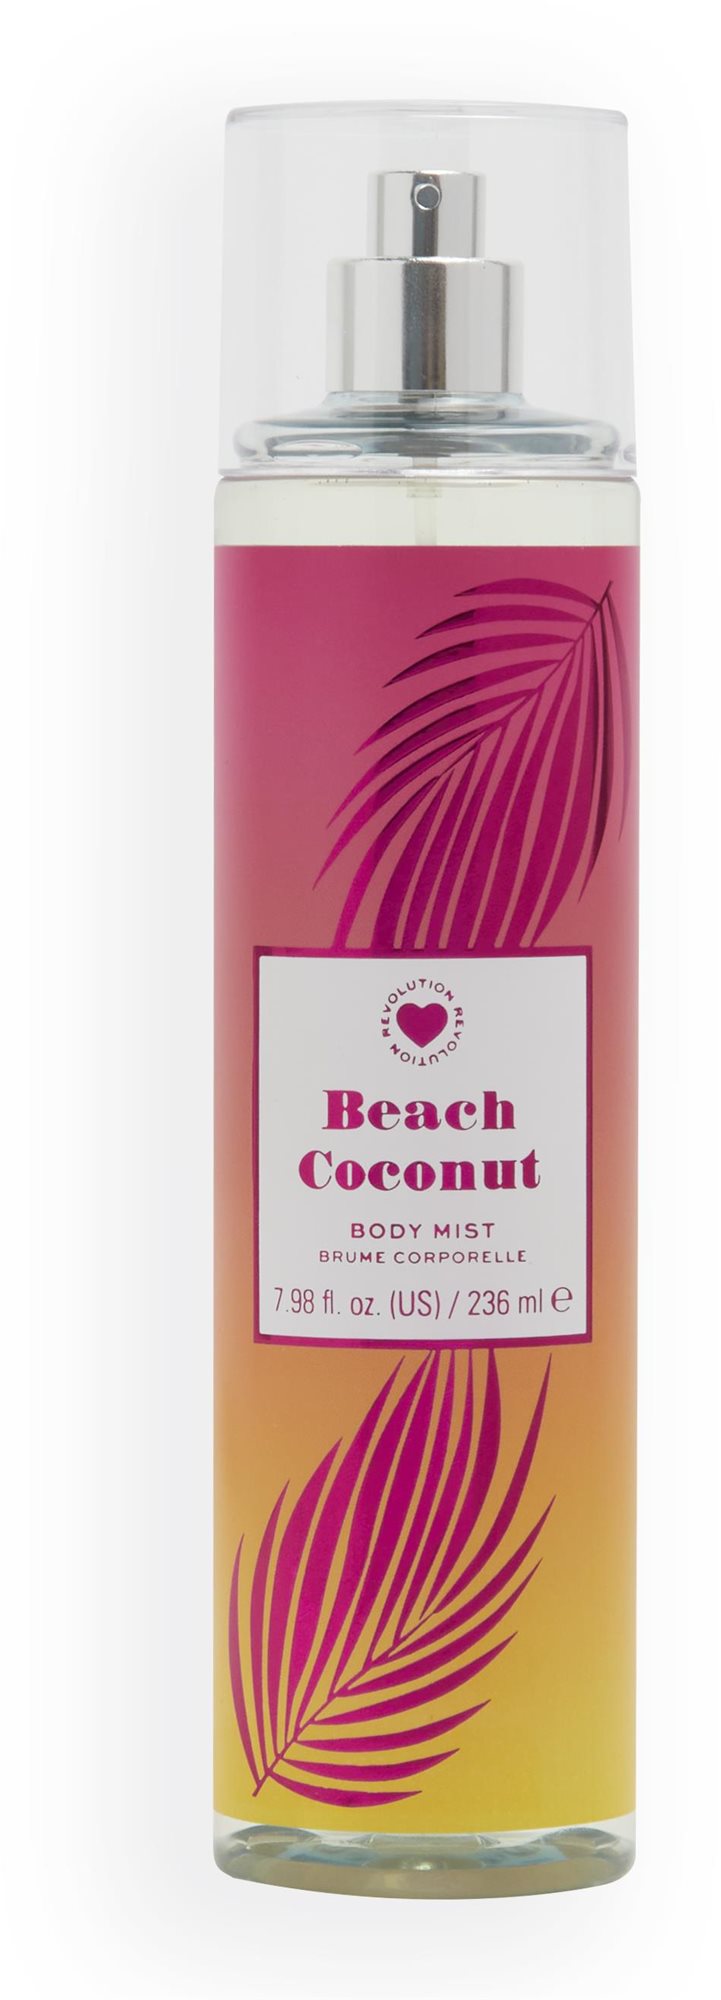 I HEART REVOLUTION Body Mist Beach Coconut 236 ml